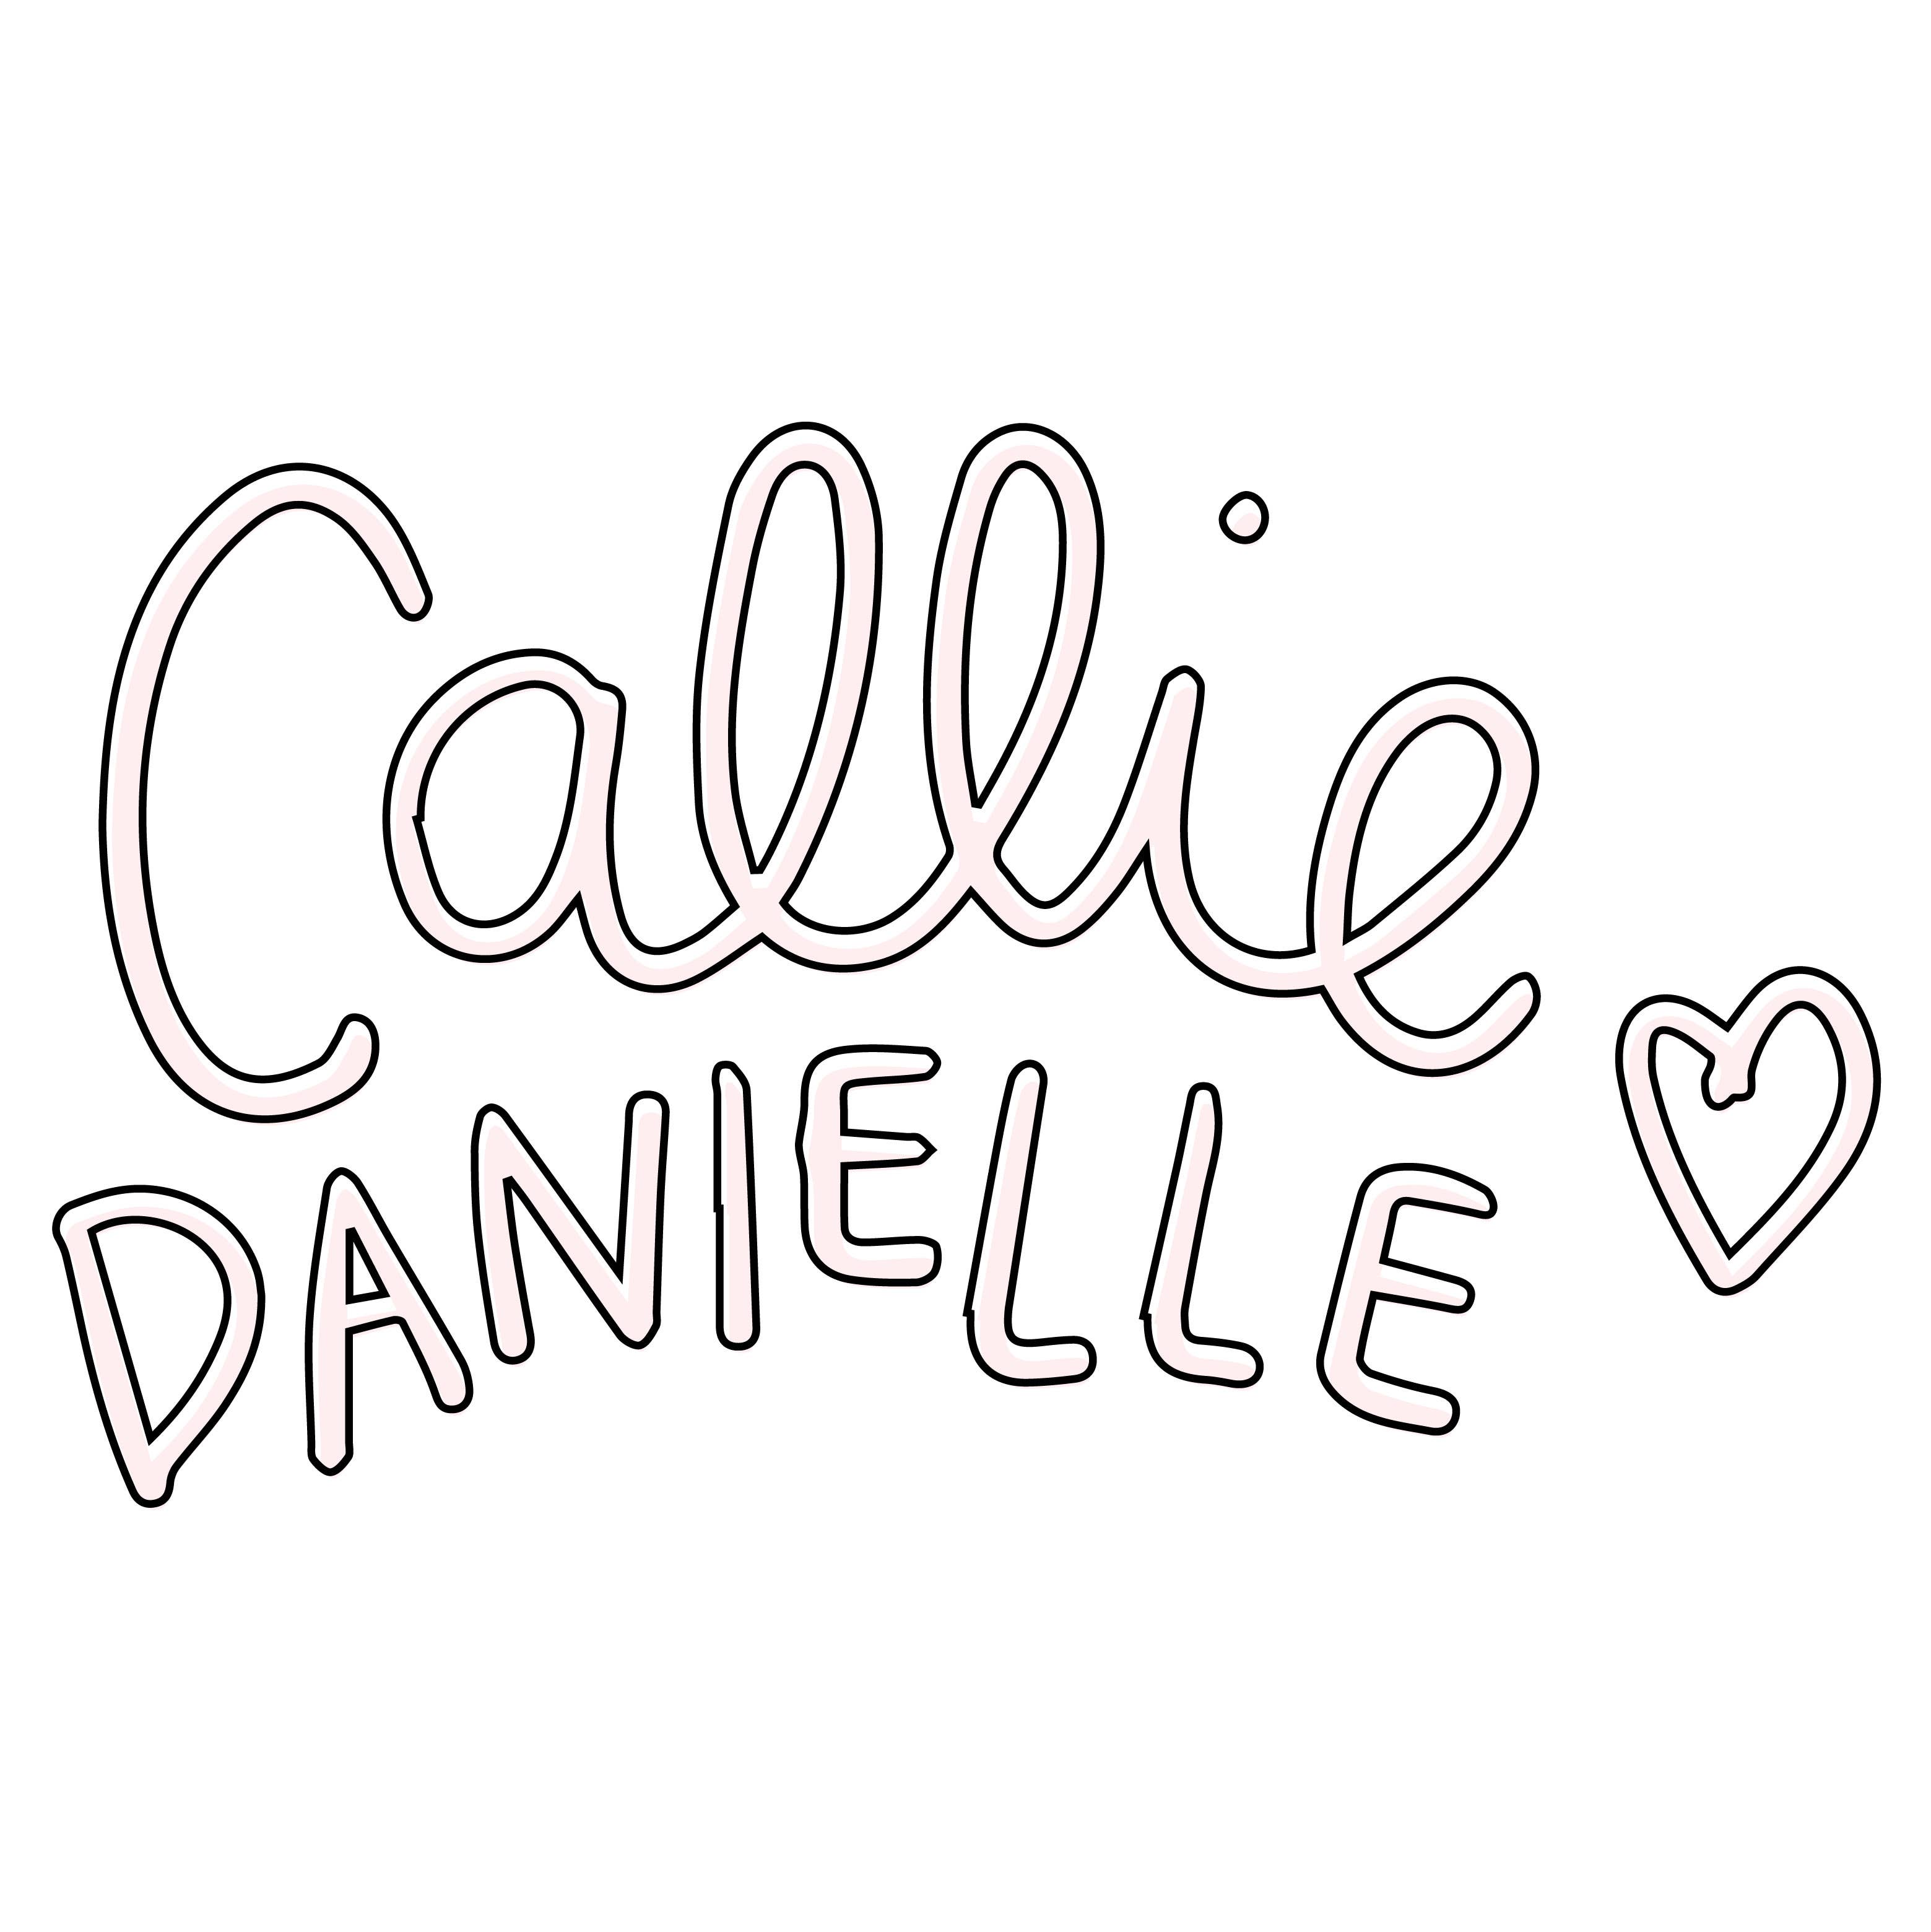 Coloring Book - Callie Danielle Shop